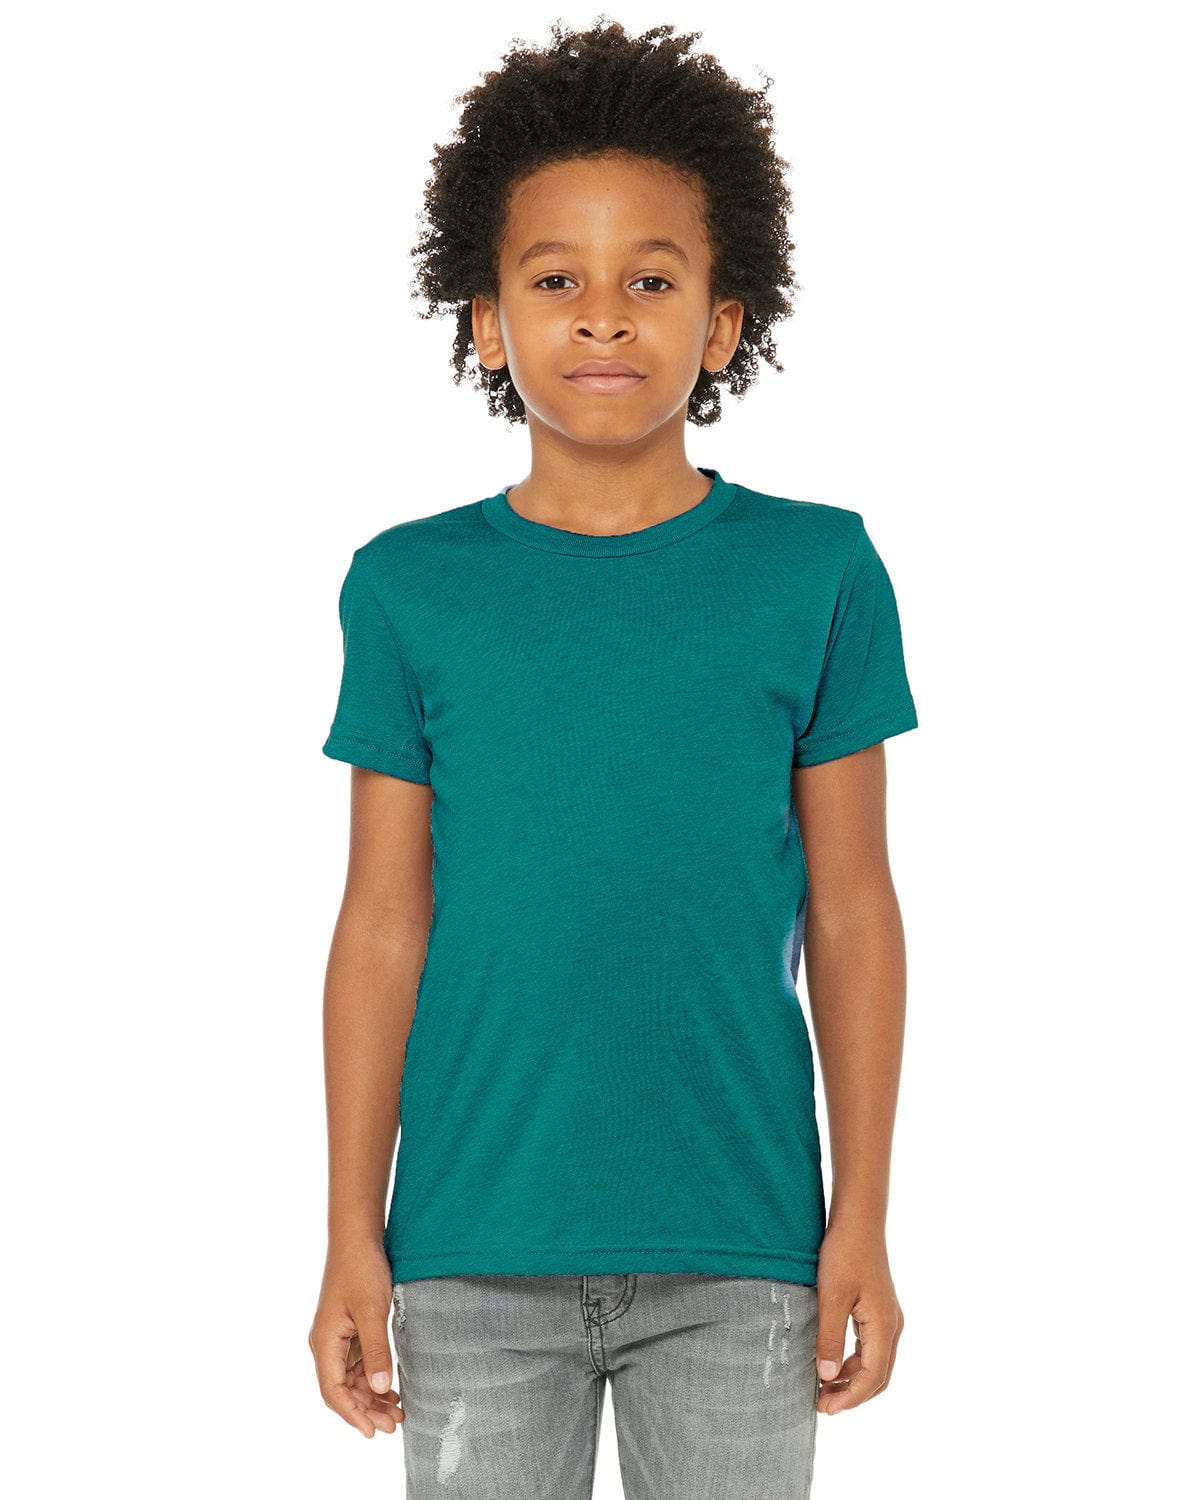 Bella+Canvas 3413Y: Youth Triblend Short-Sleeve T-Shirt